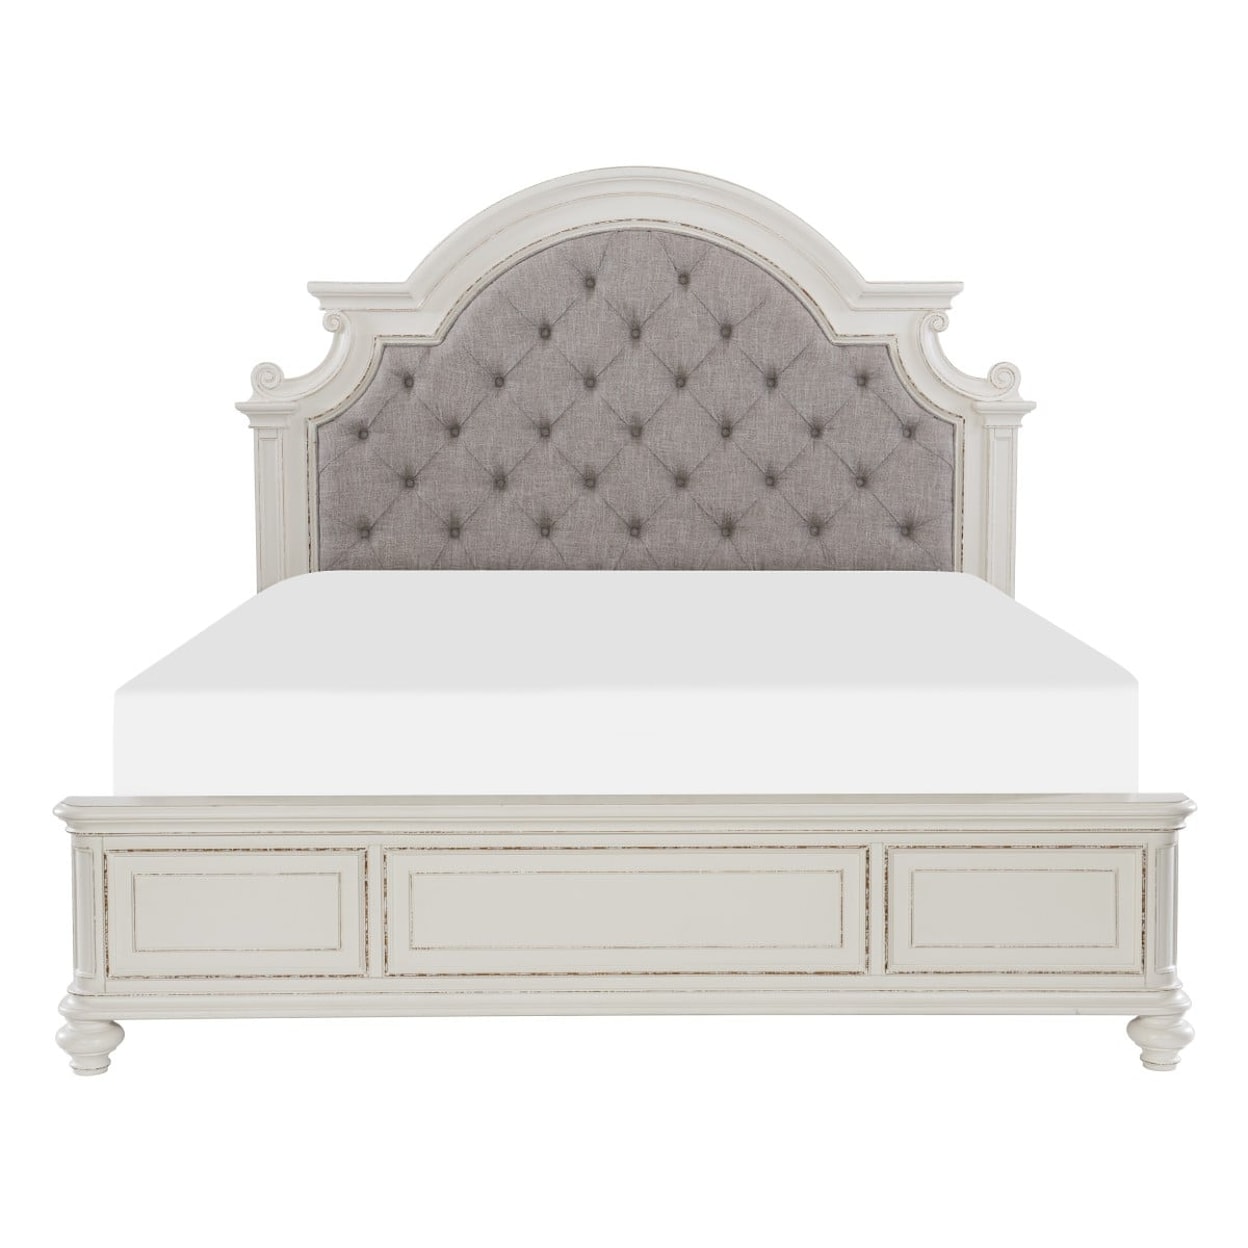 Homelegance Furniture Baylesford Queen Bed